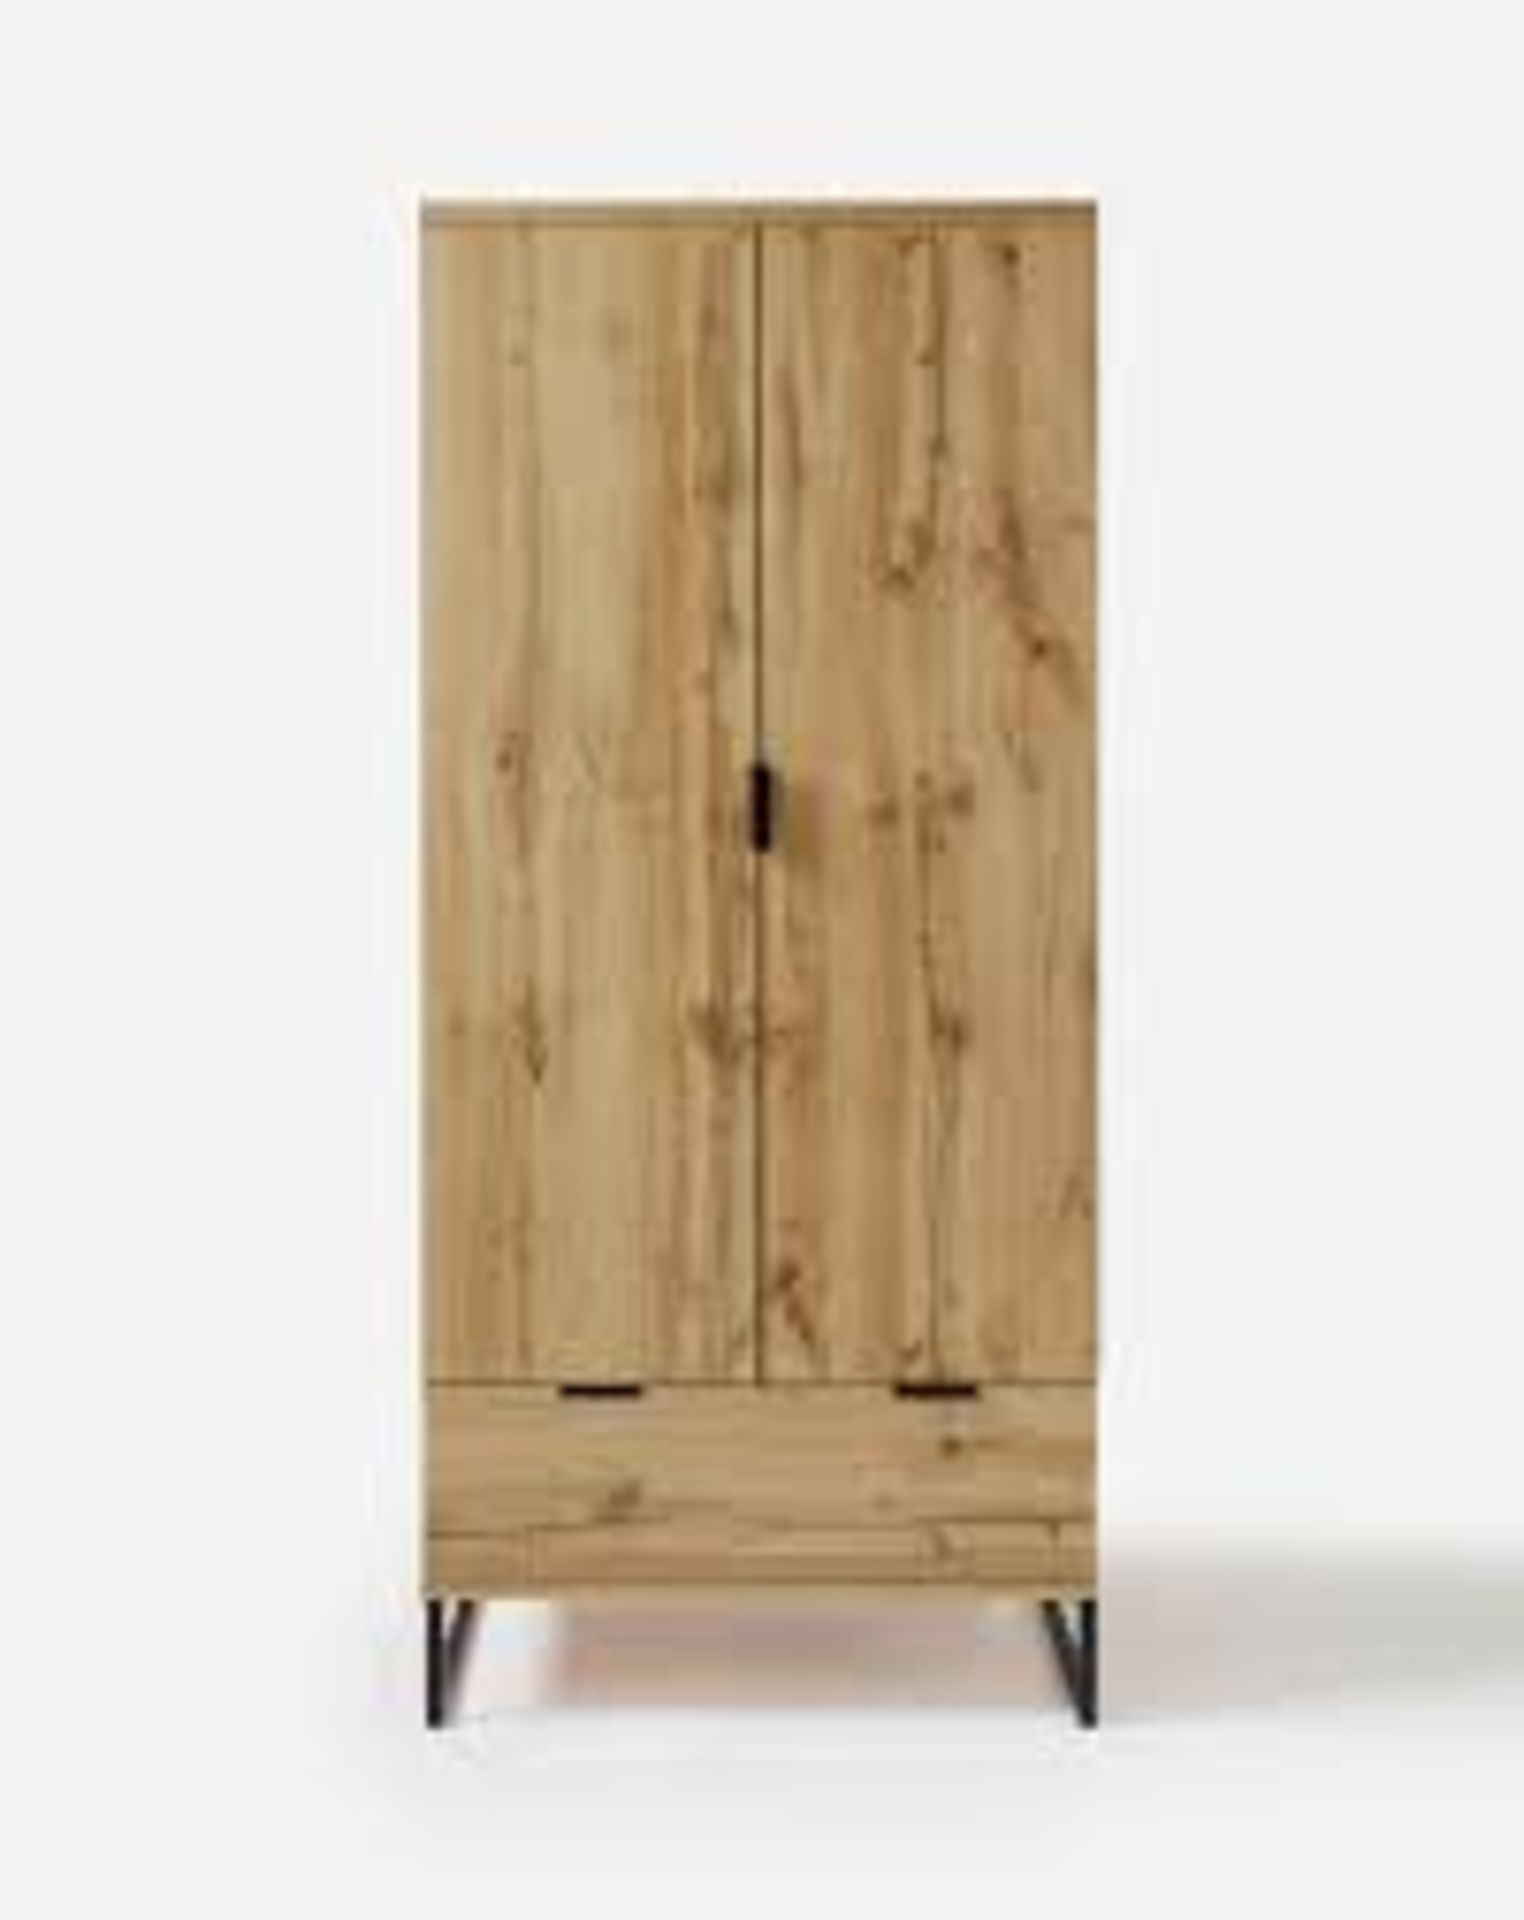 Brand New Oak Shoreditch Wardrobe, The Shoreditch Range has a contemporary and minimalist design,